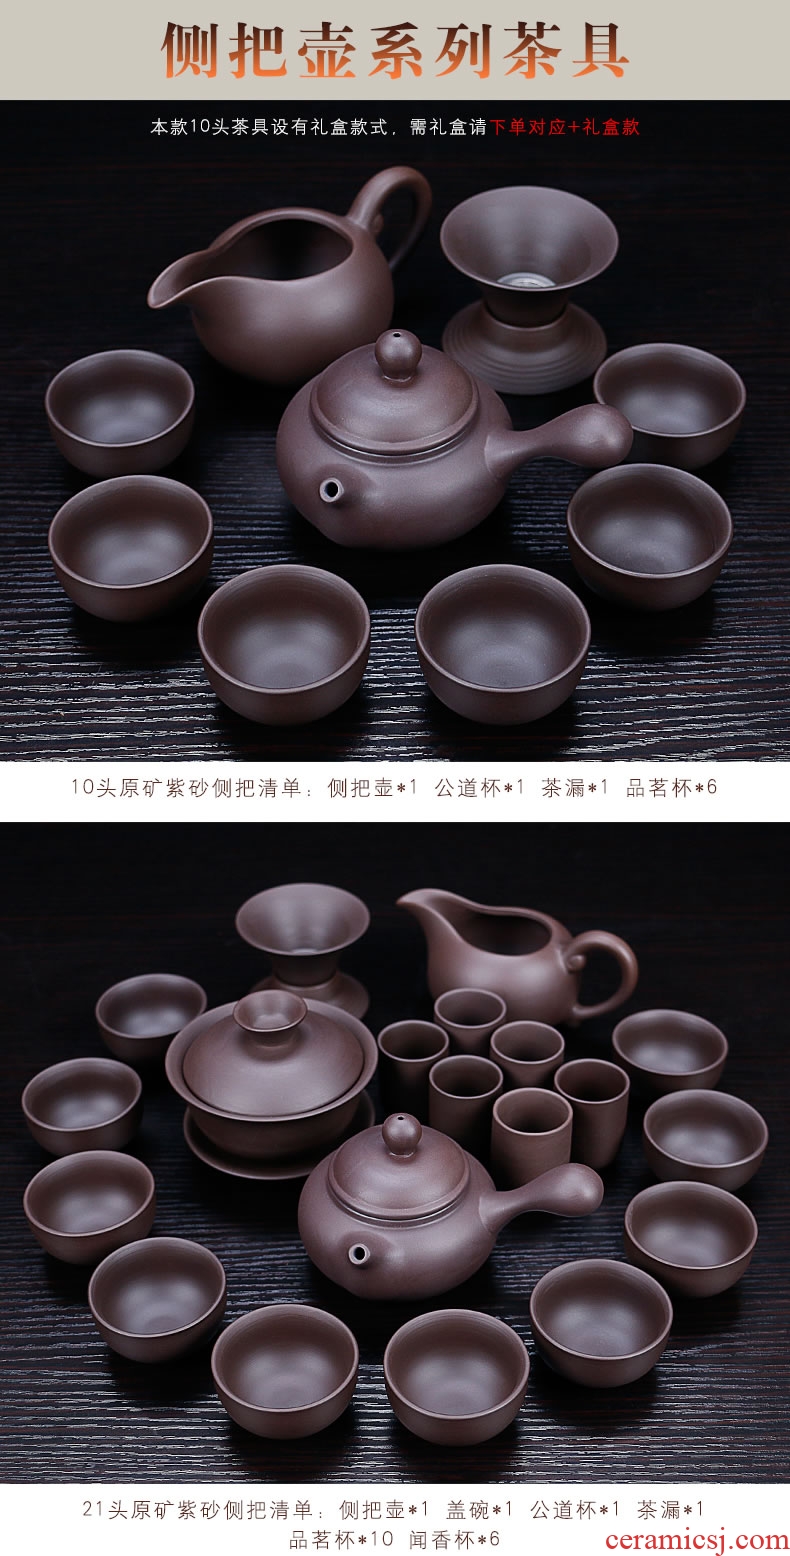 Tao blessing household violet arenaceous kung fu tea sets a complete set of ceramic teapot teacup tea gift set tea service